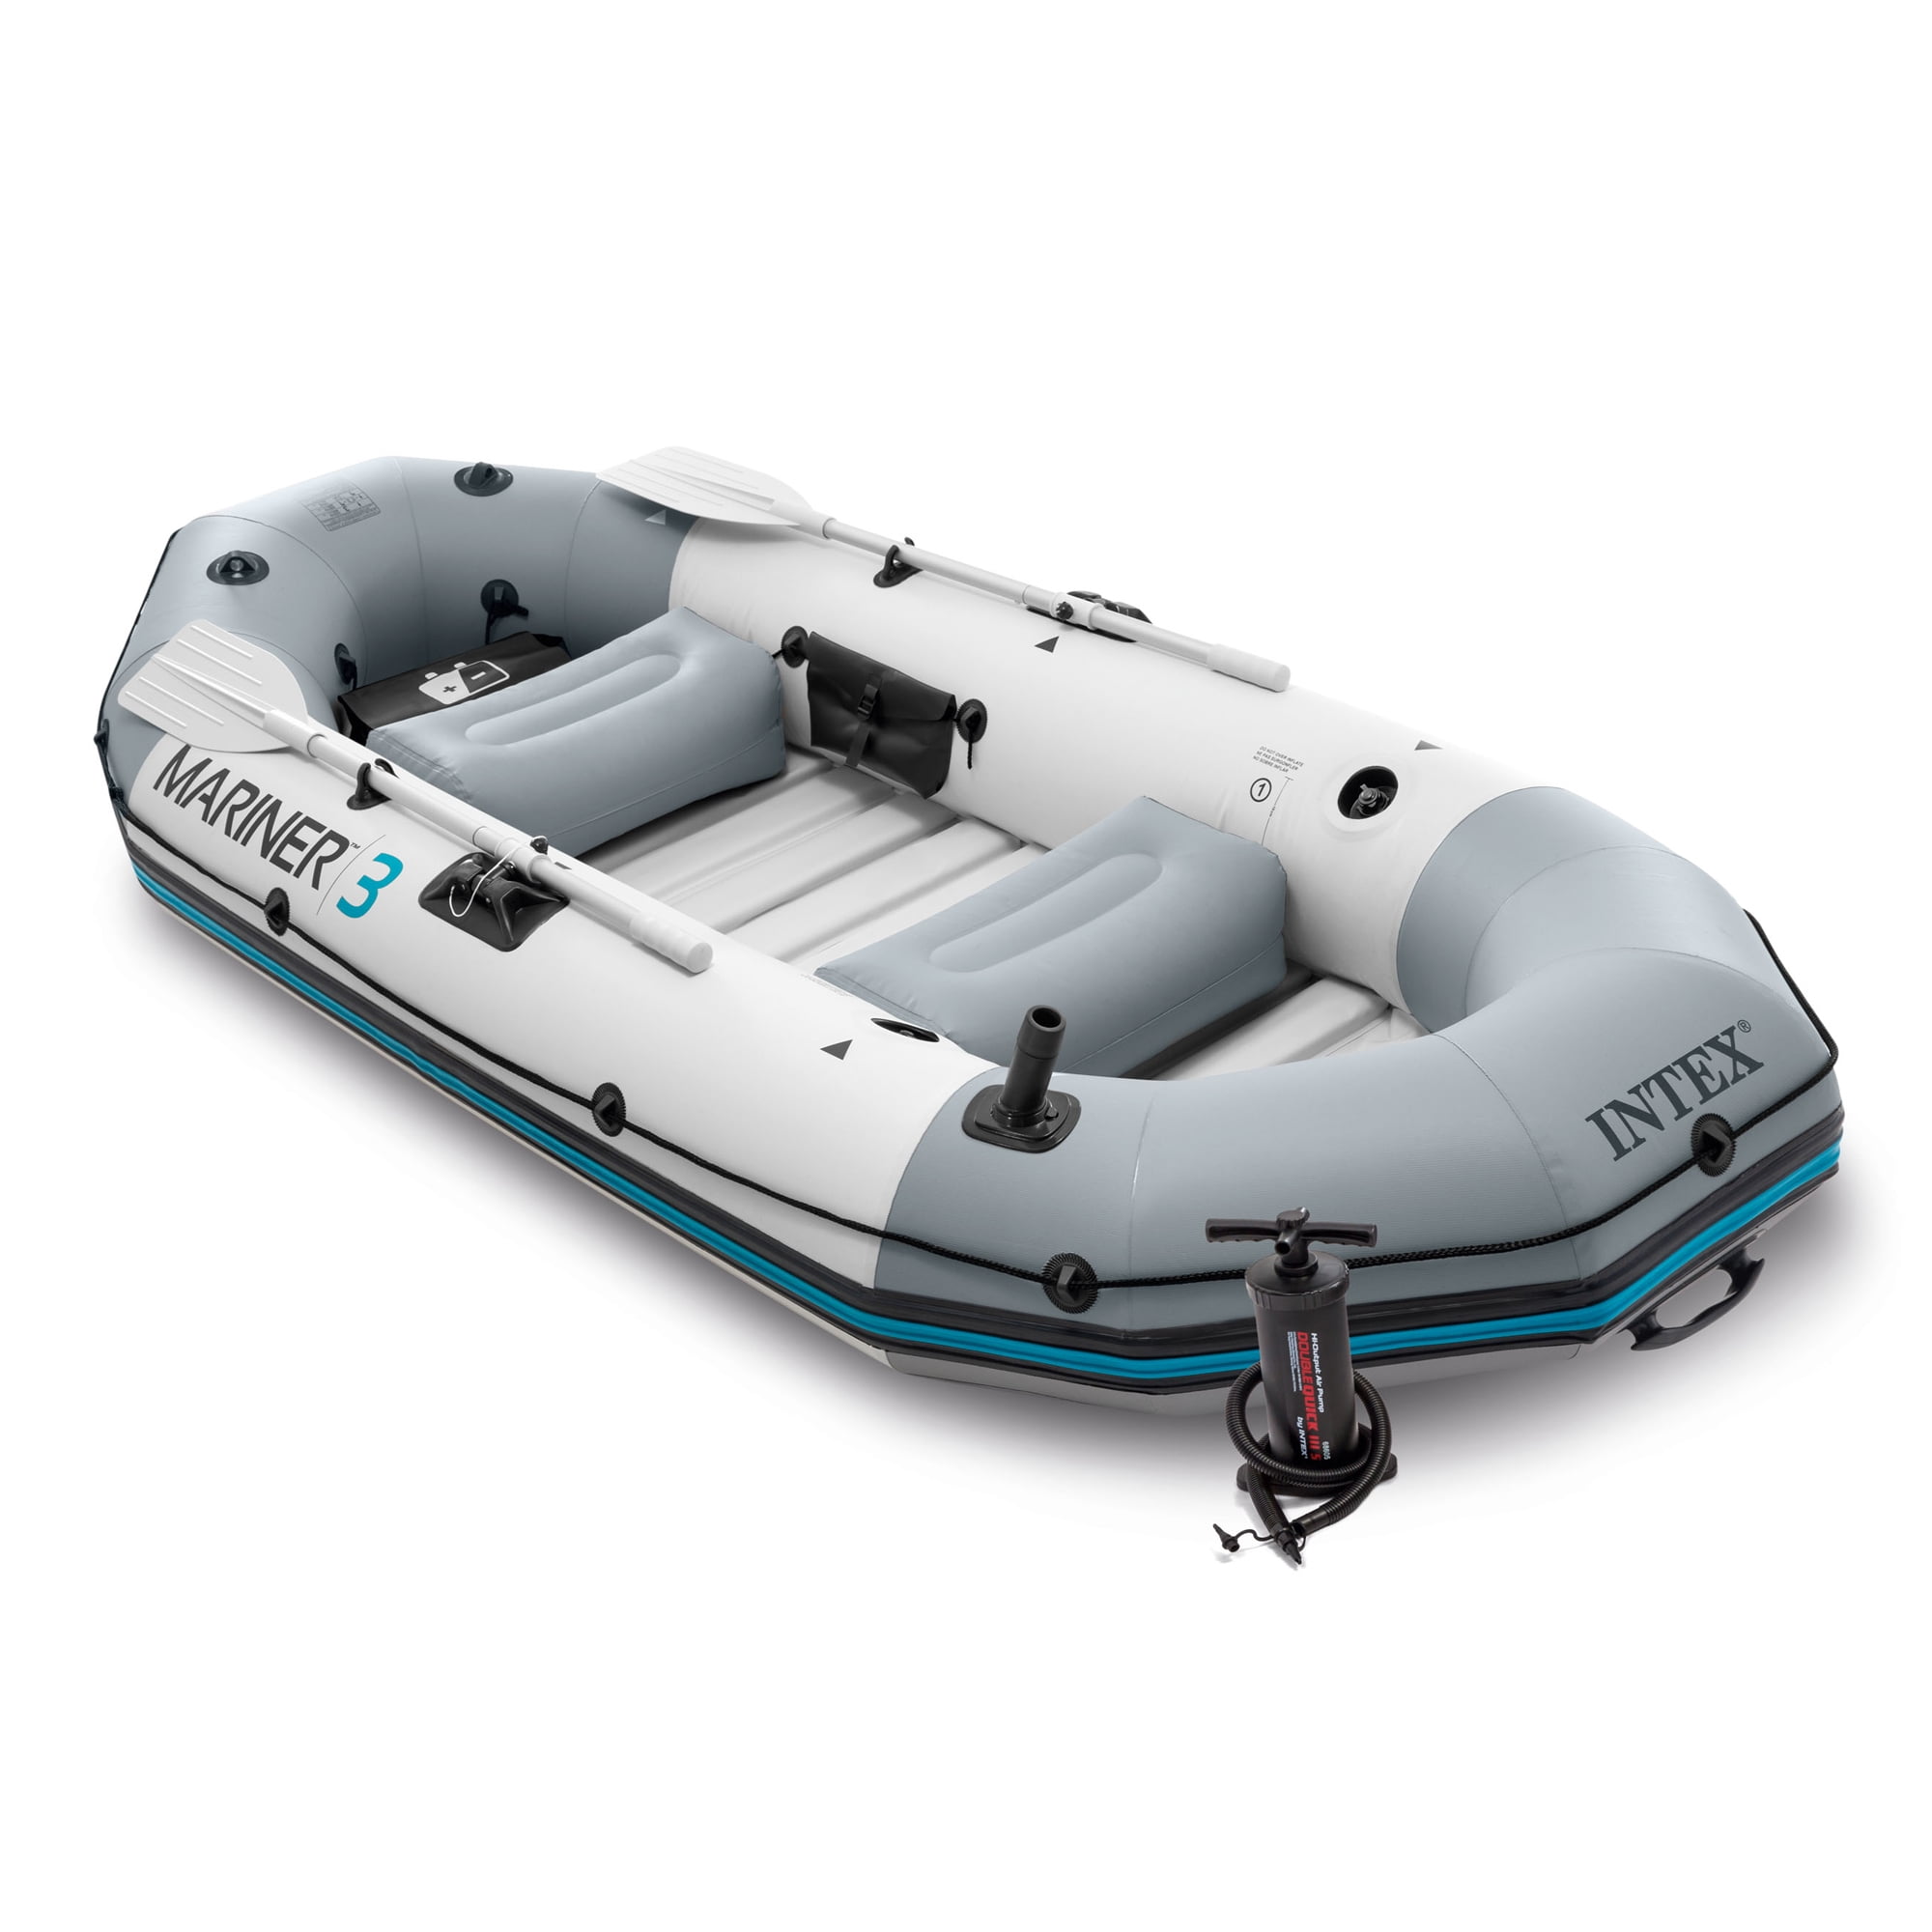 Intex Mariner 3, 3-Person Inflatable River/Lake Dinghy Boat & Set - Walmart.com